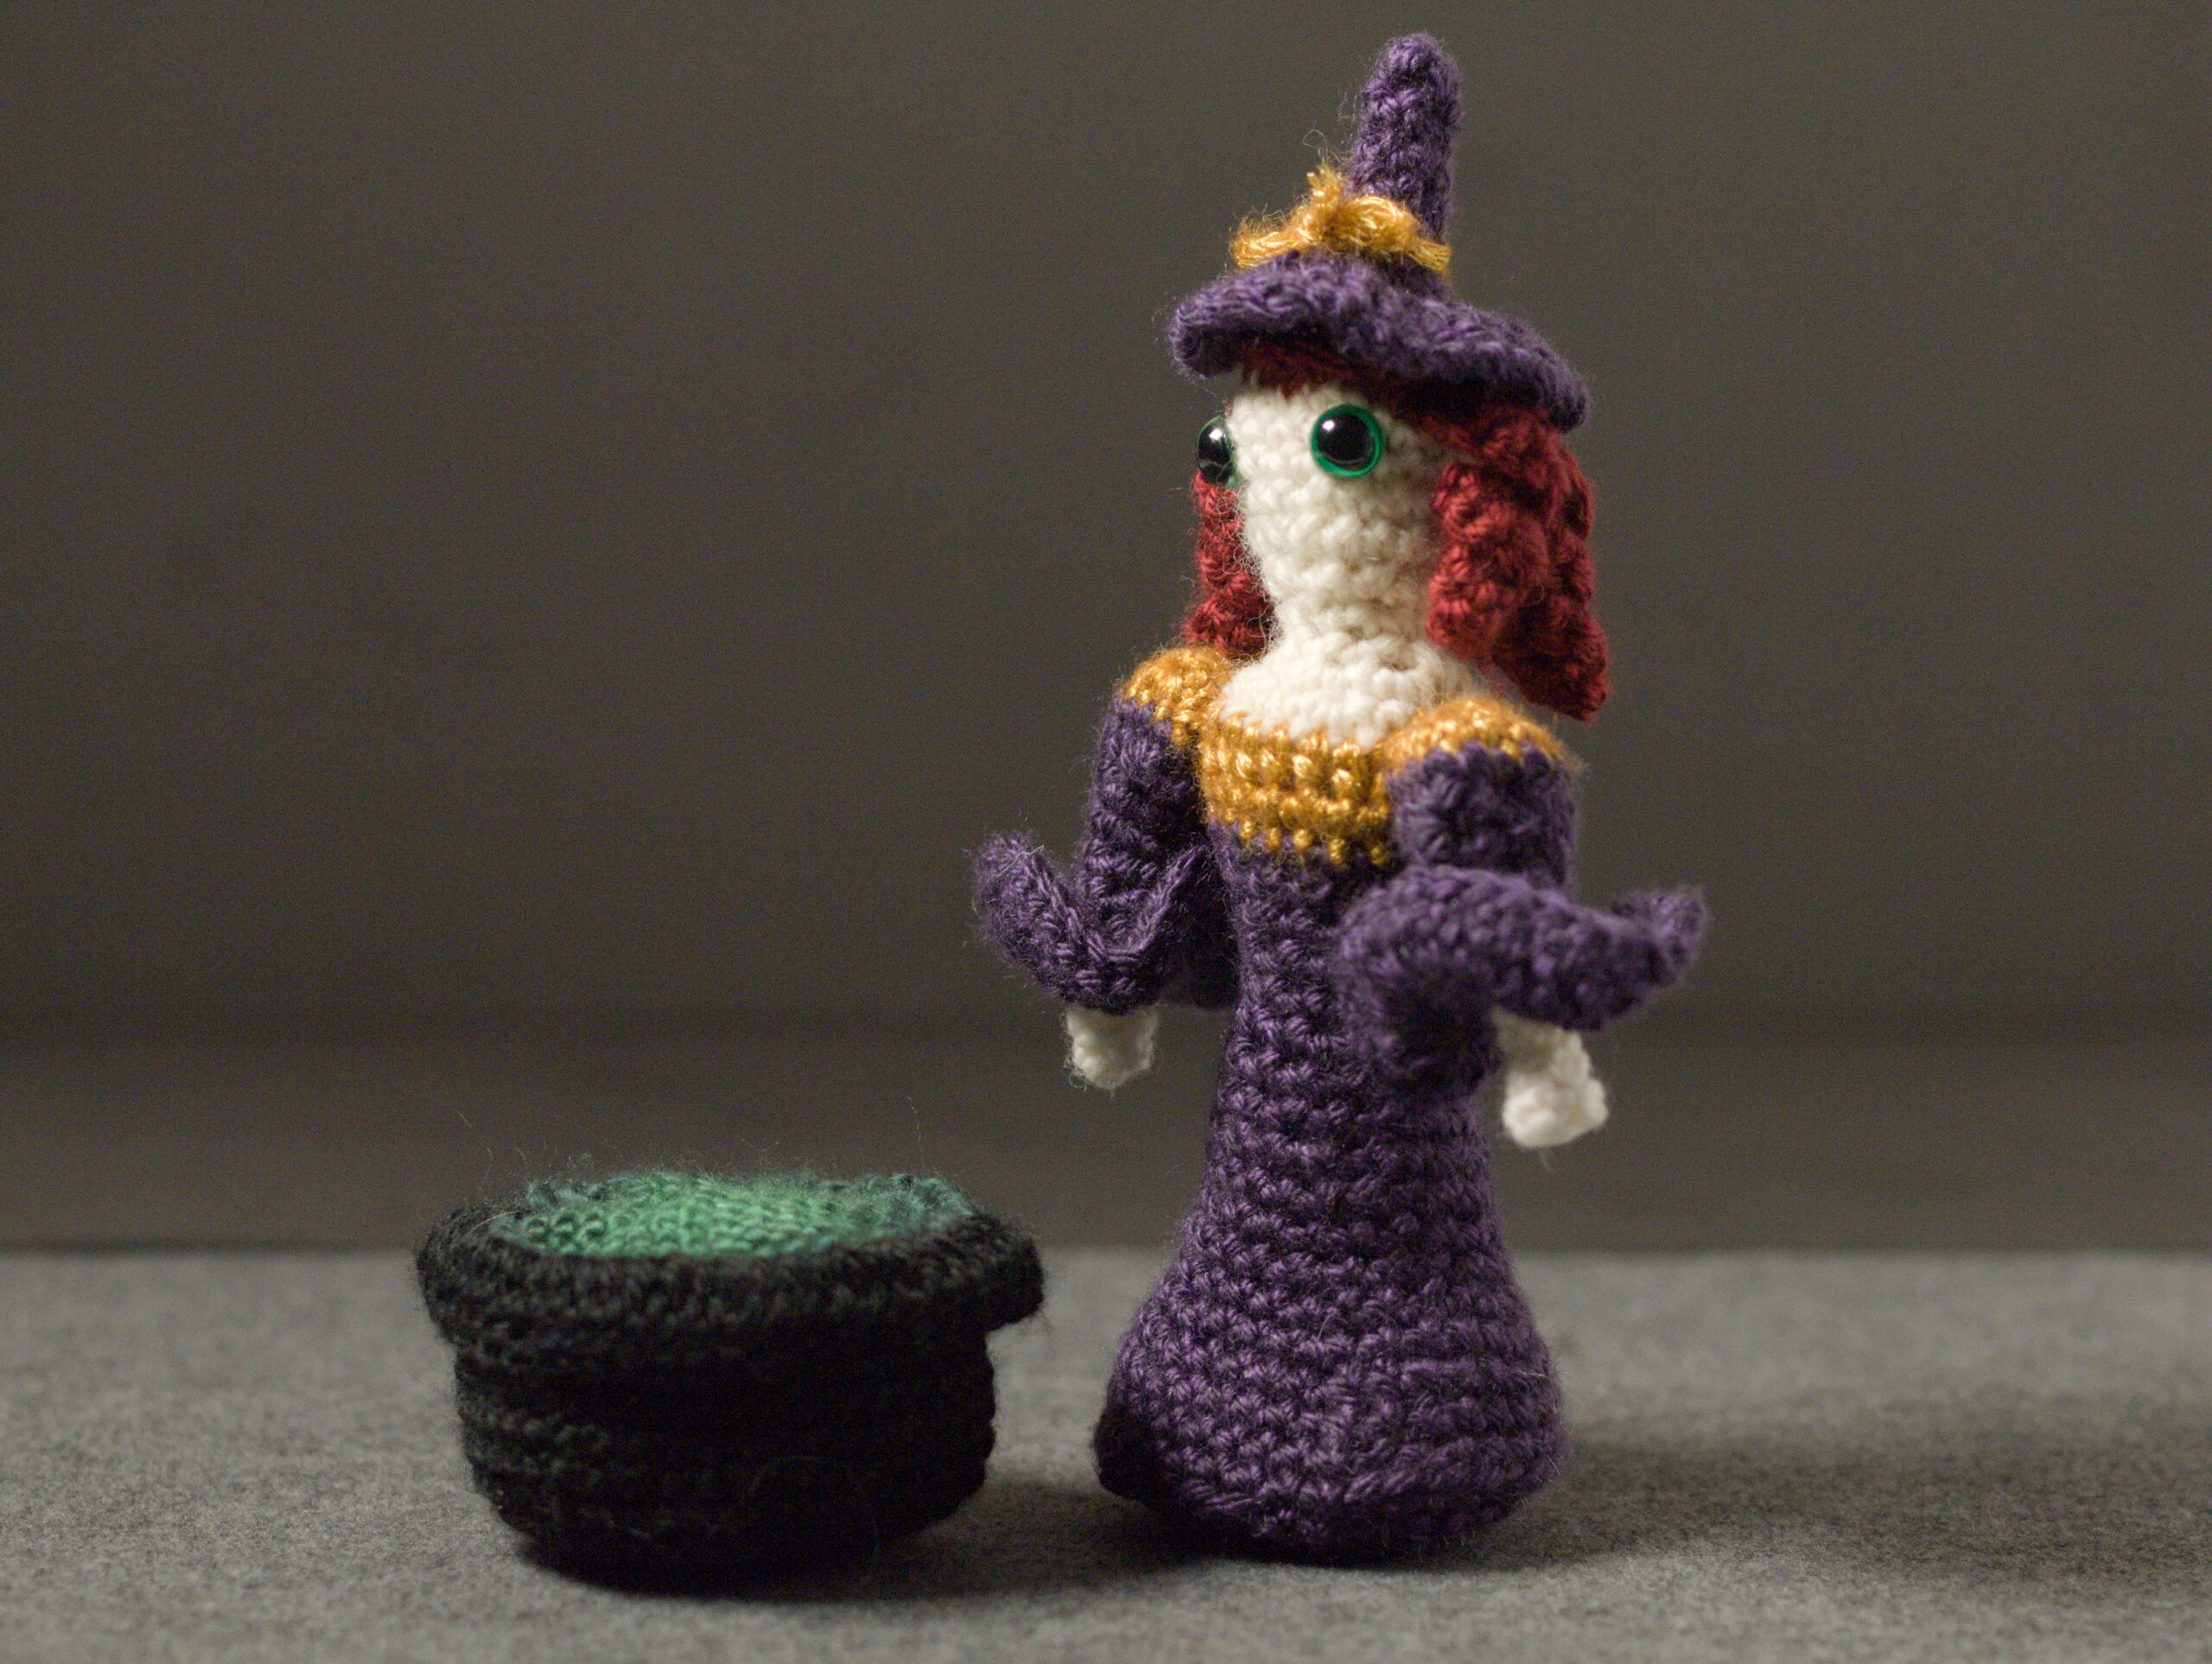 Original Pattern: How to Make a Crochet Cauldron